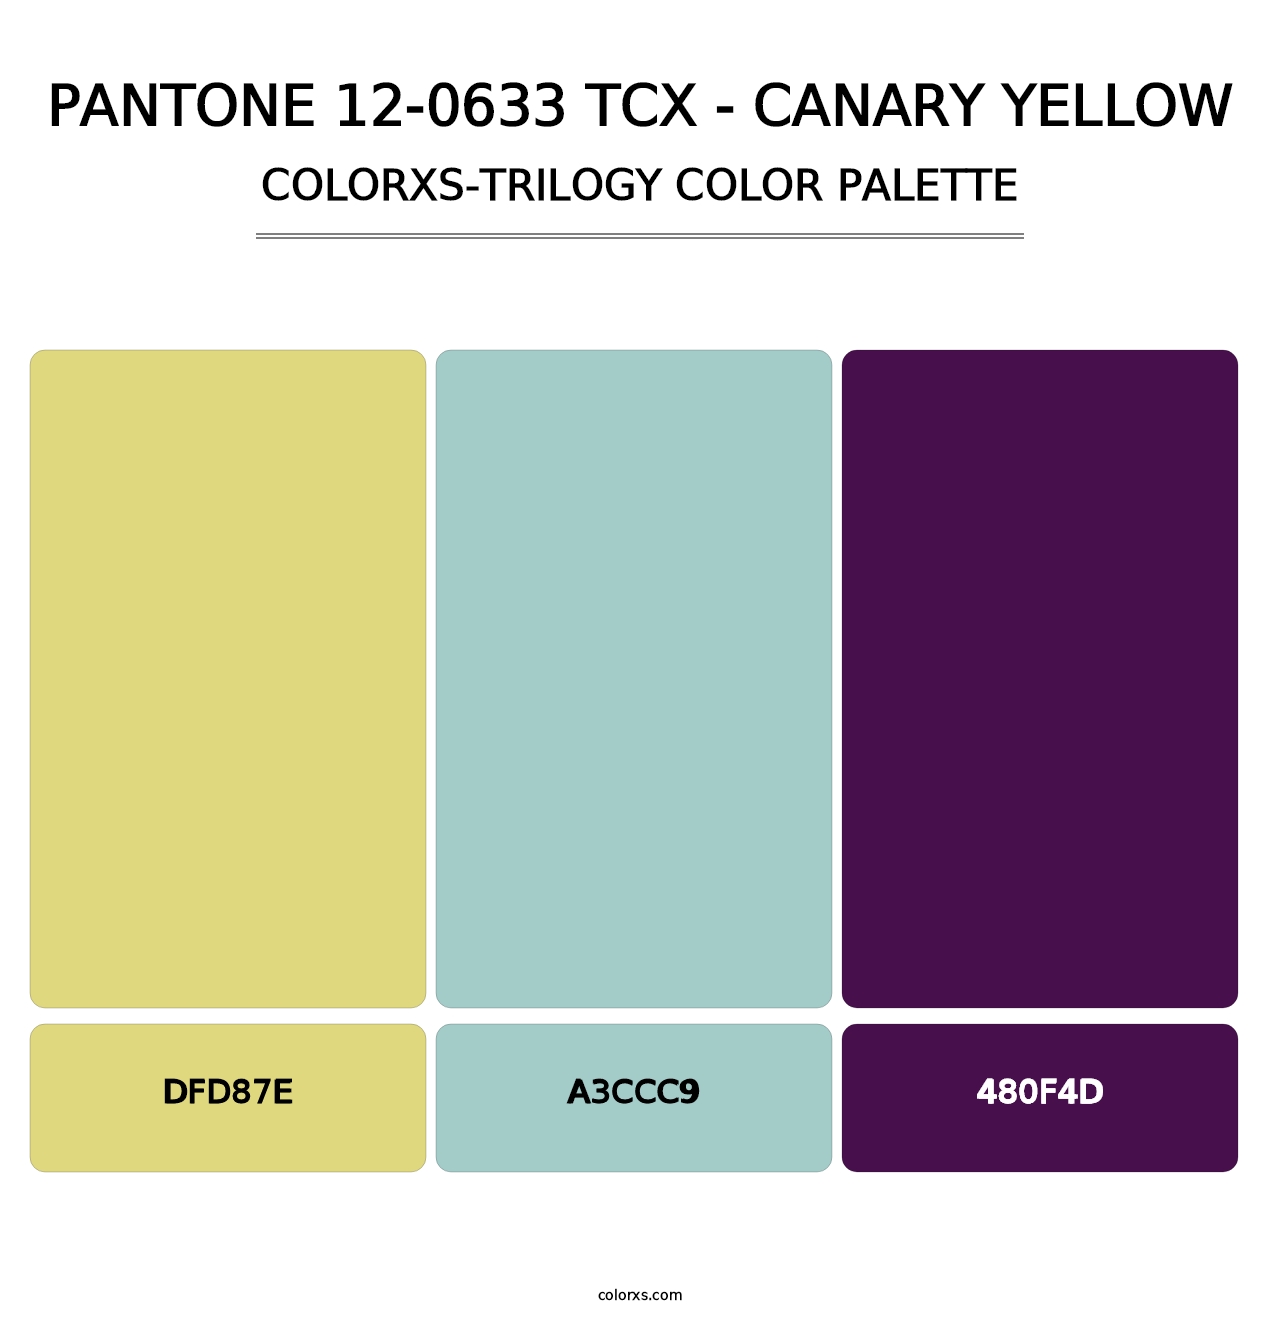 PANTONE 12-0633 TCX - Canary Yellow - Colorxs Trilogy Palette